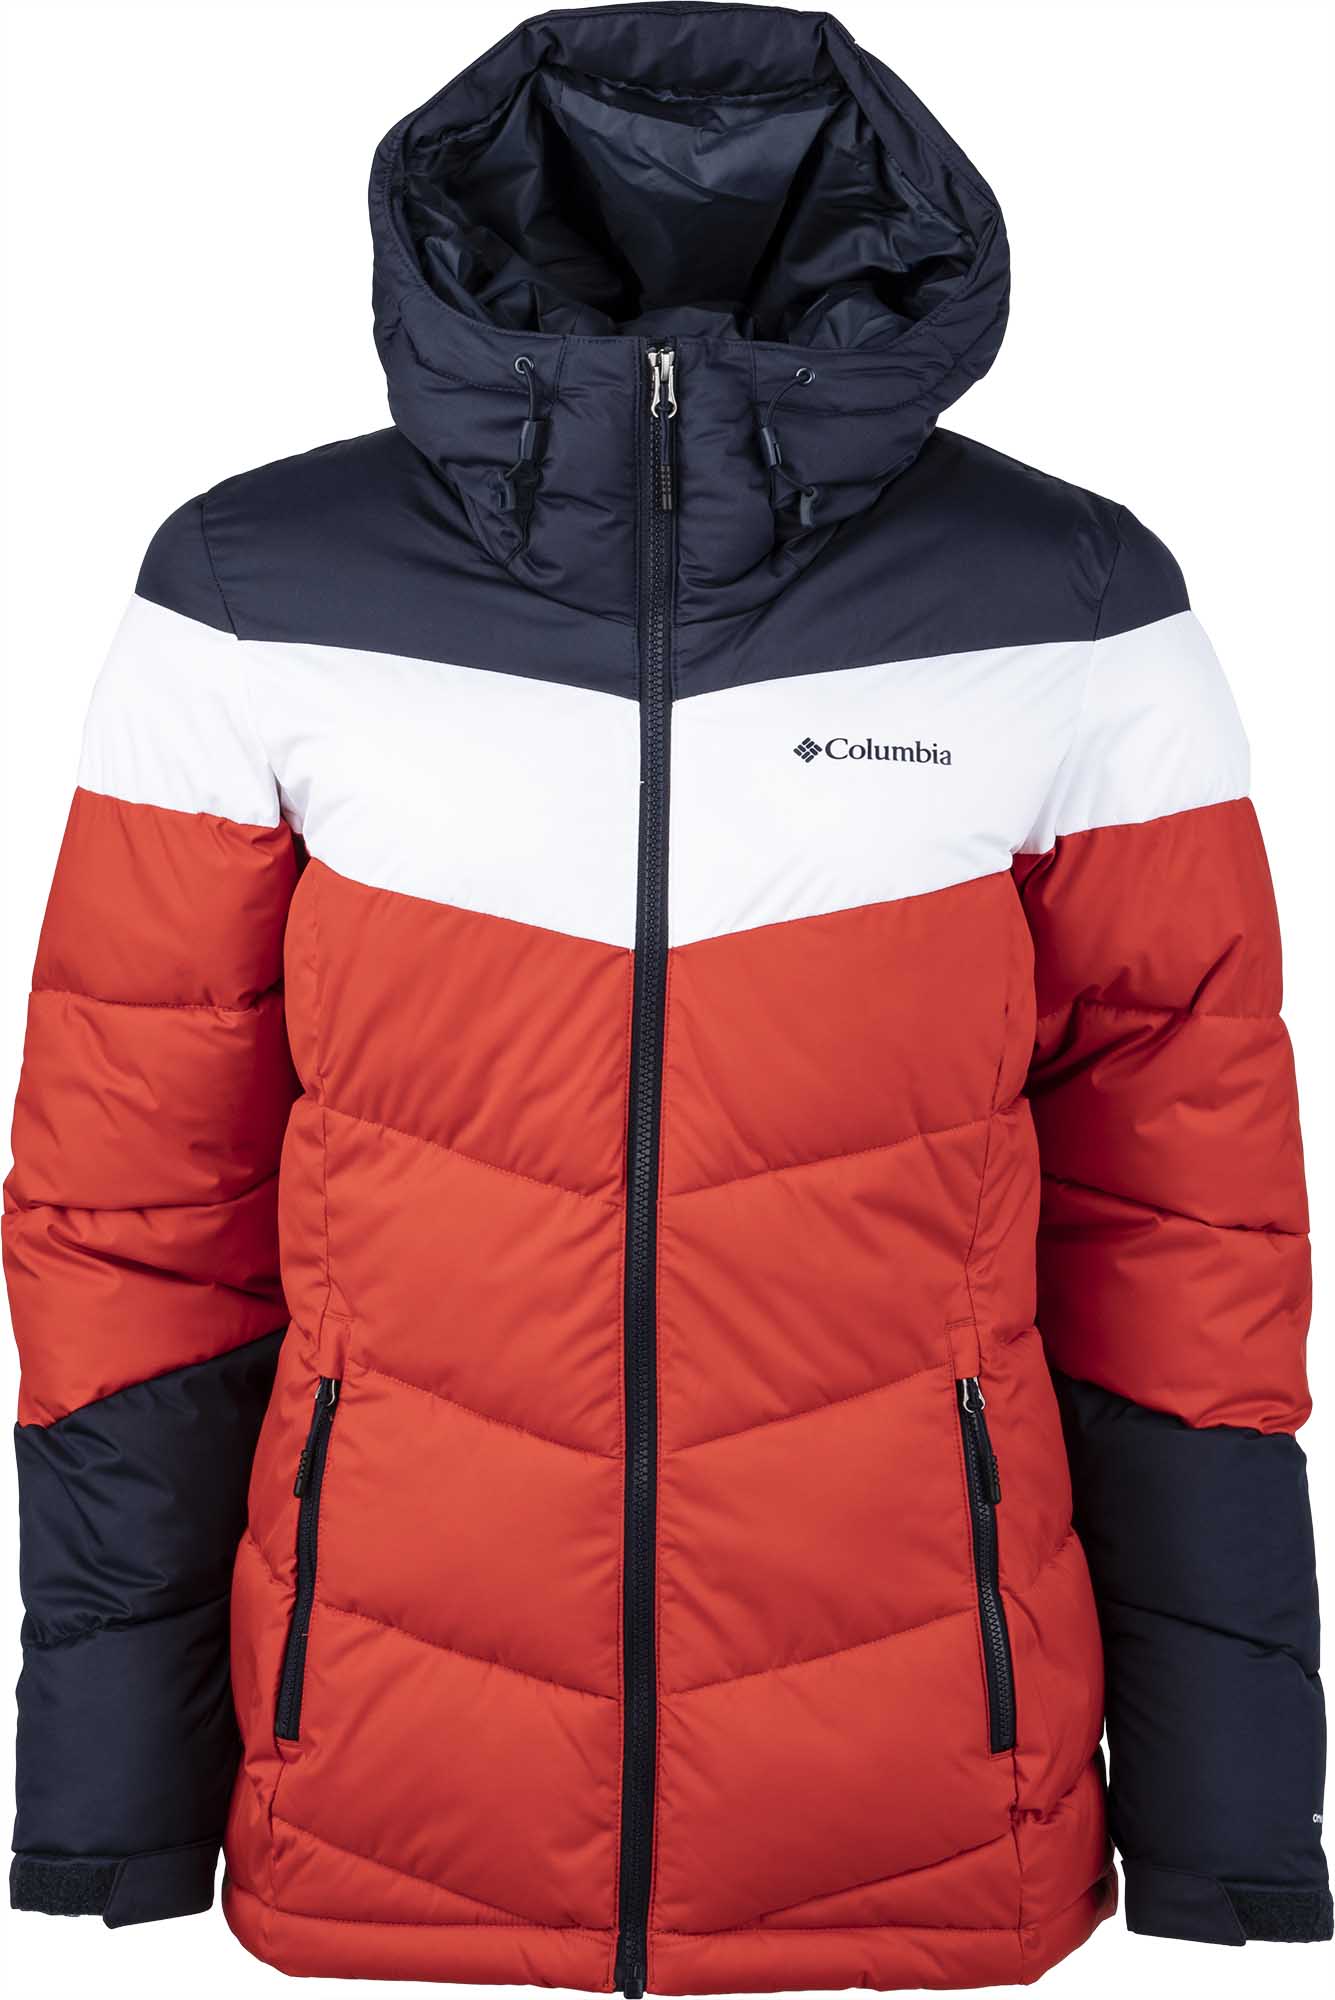 Women's insulated ski jacket